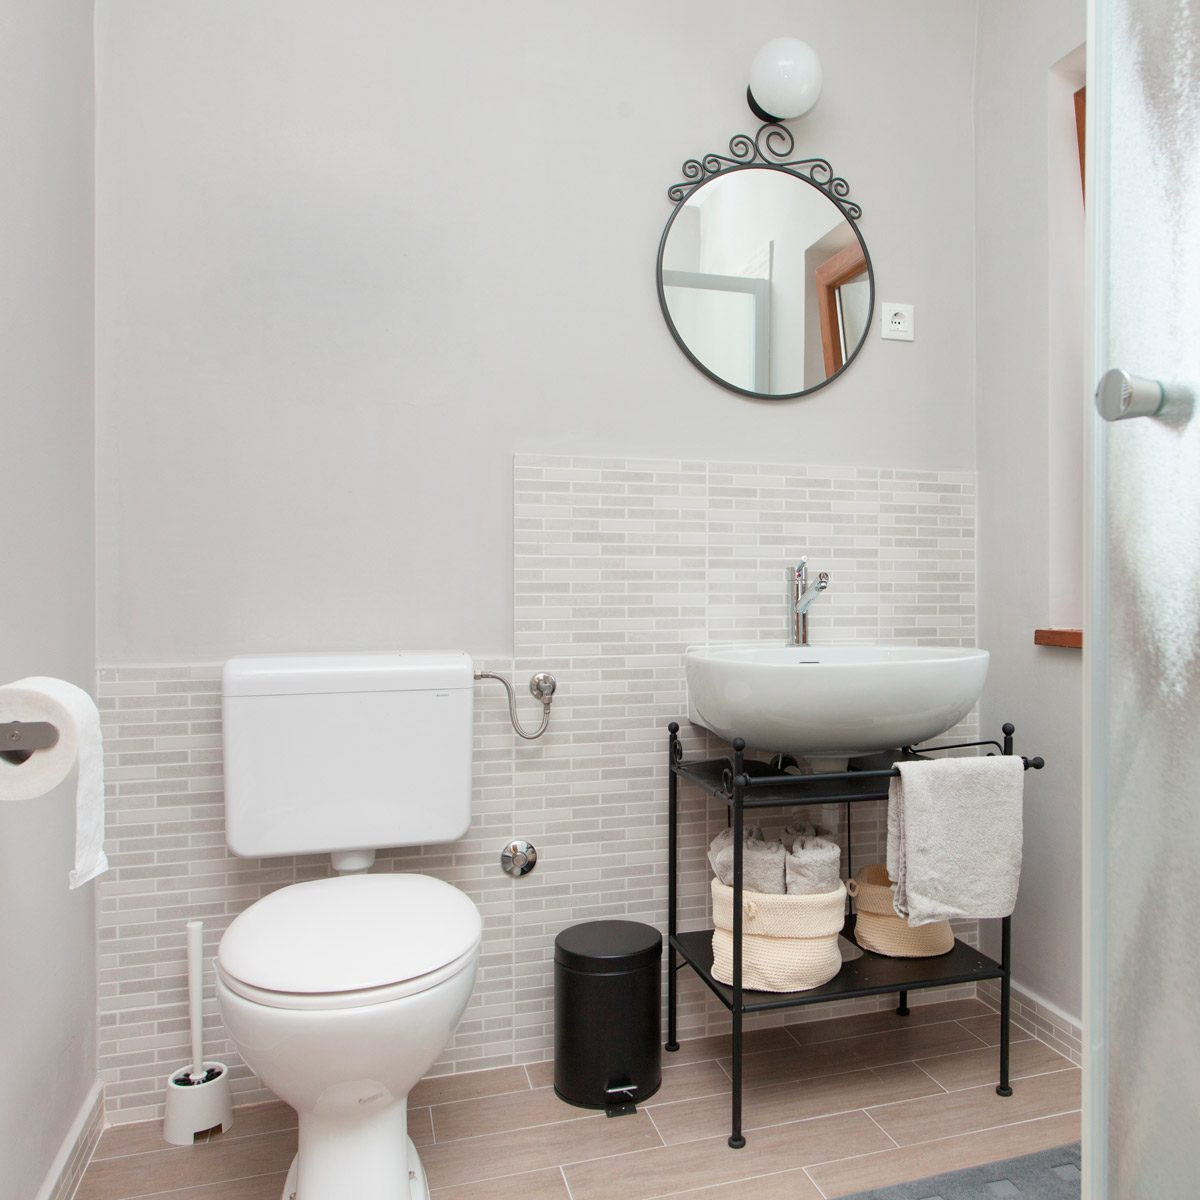 Toilets For Small Bathroom
 10 Small Bathroom Ideas That Make a Big Impact